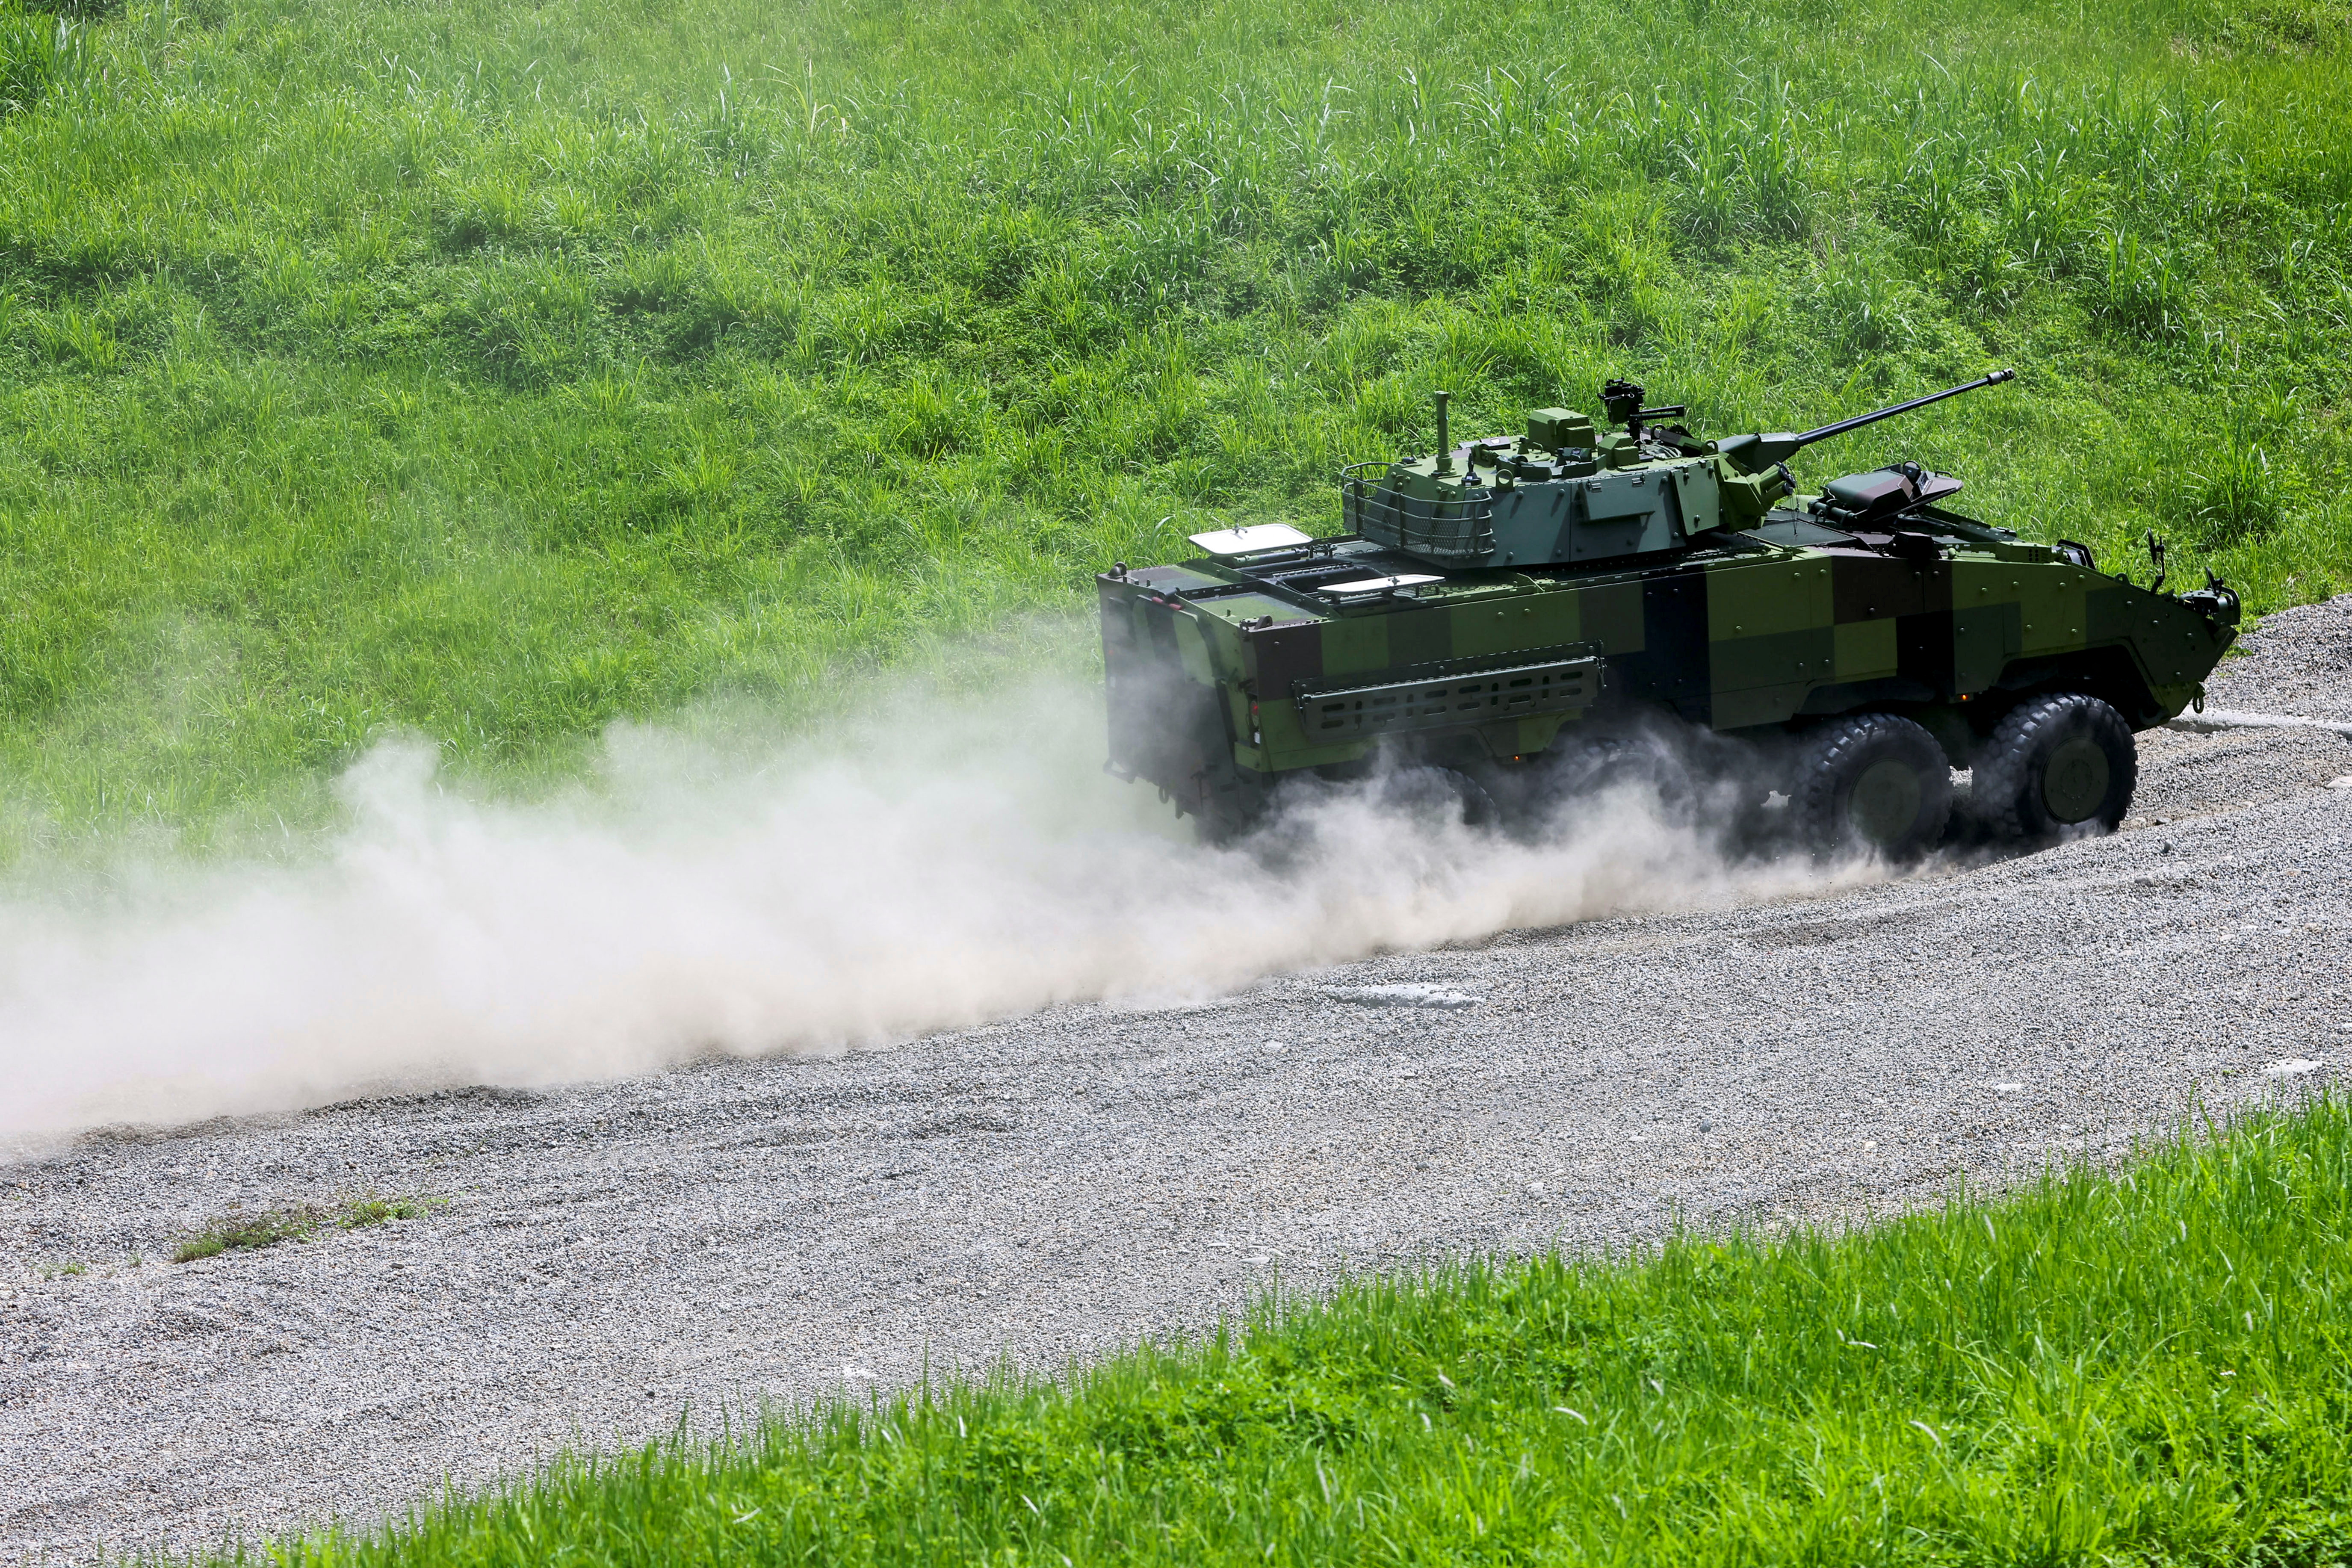 Taiwan military's latest armoured vehicle the CM-34 